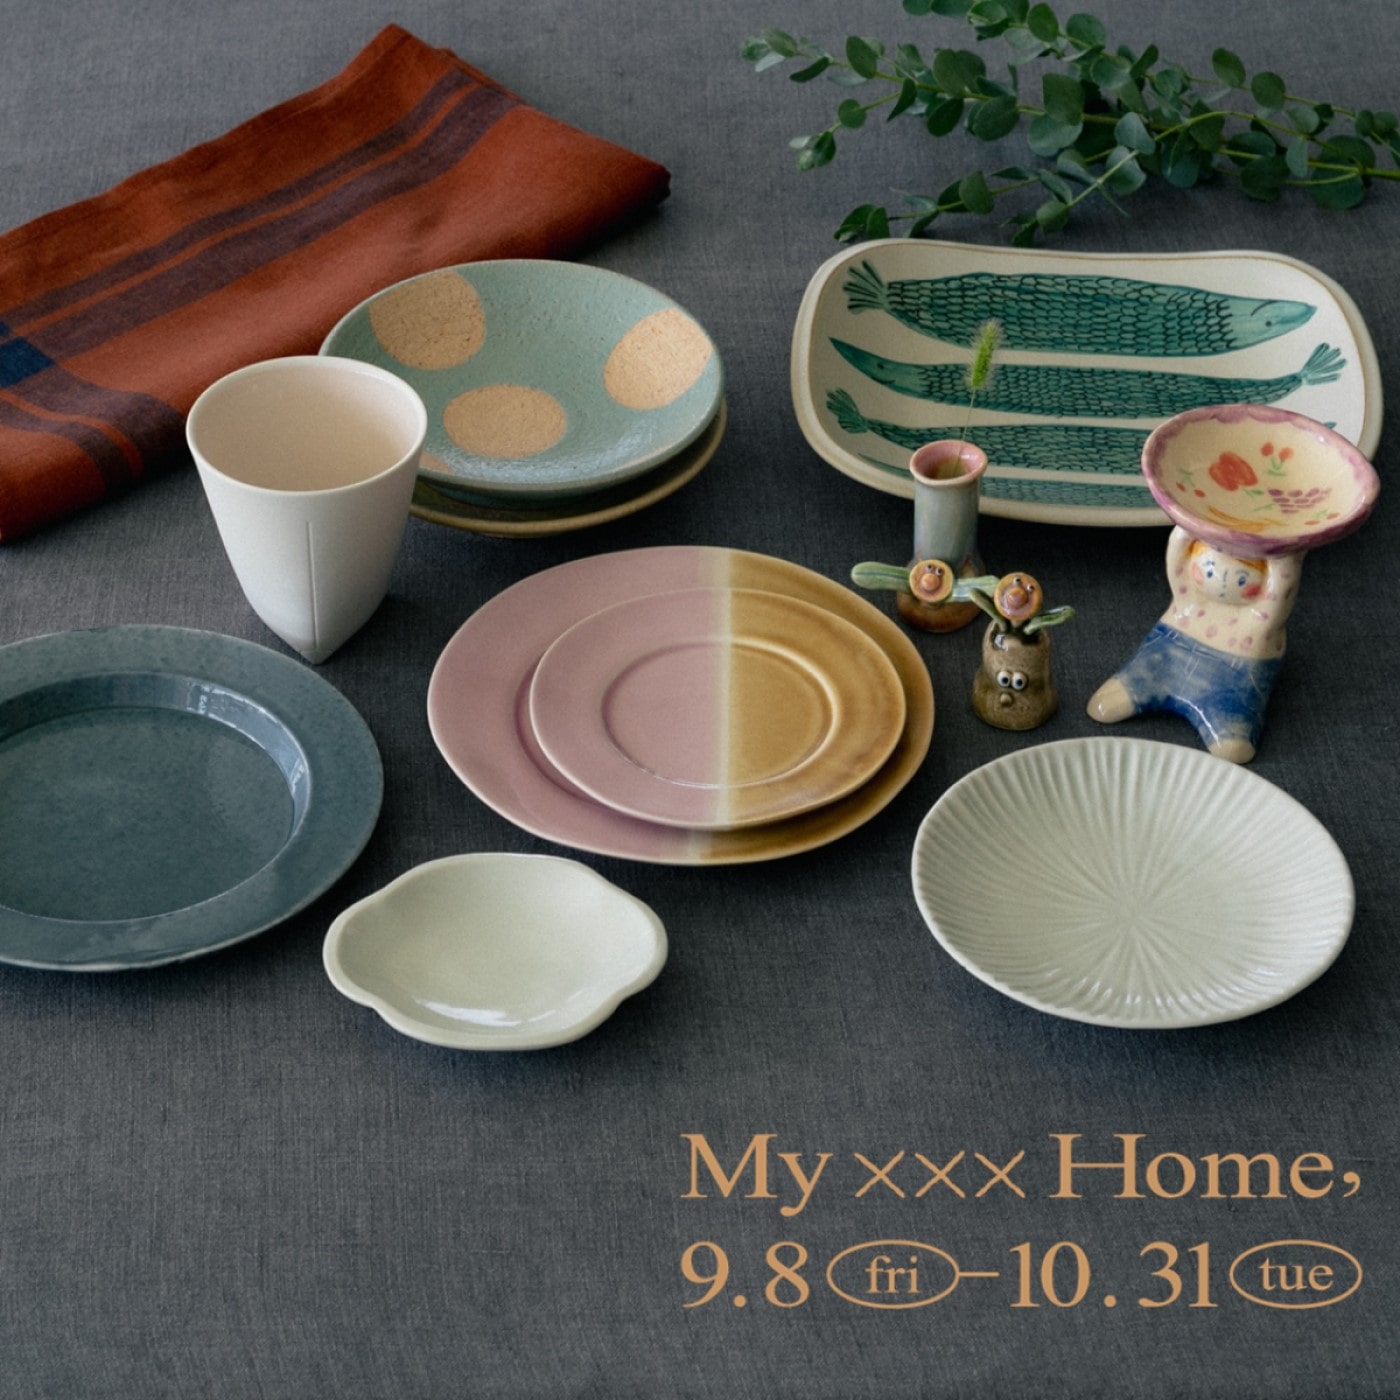 My xxx Home, - オンライン陶器市 -